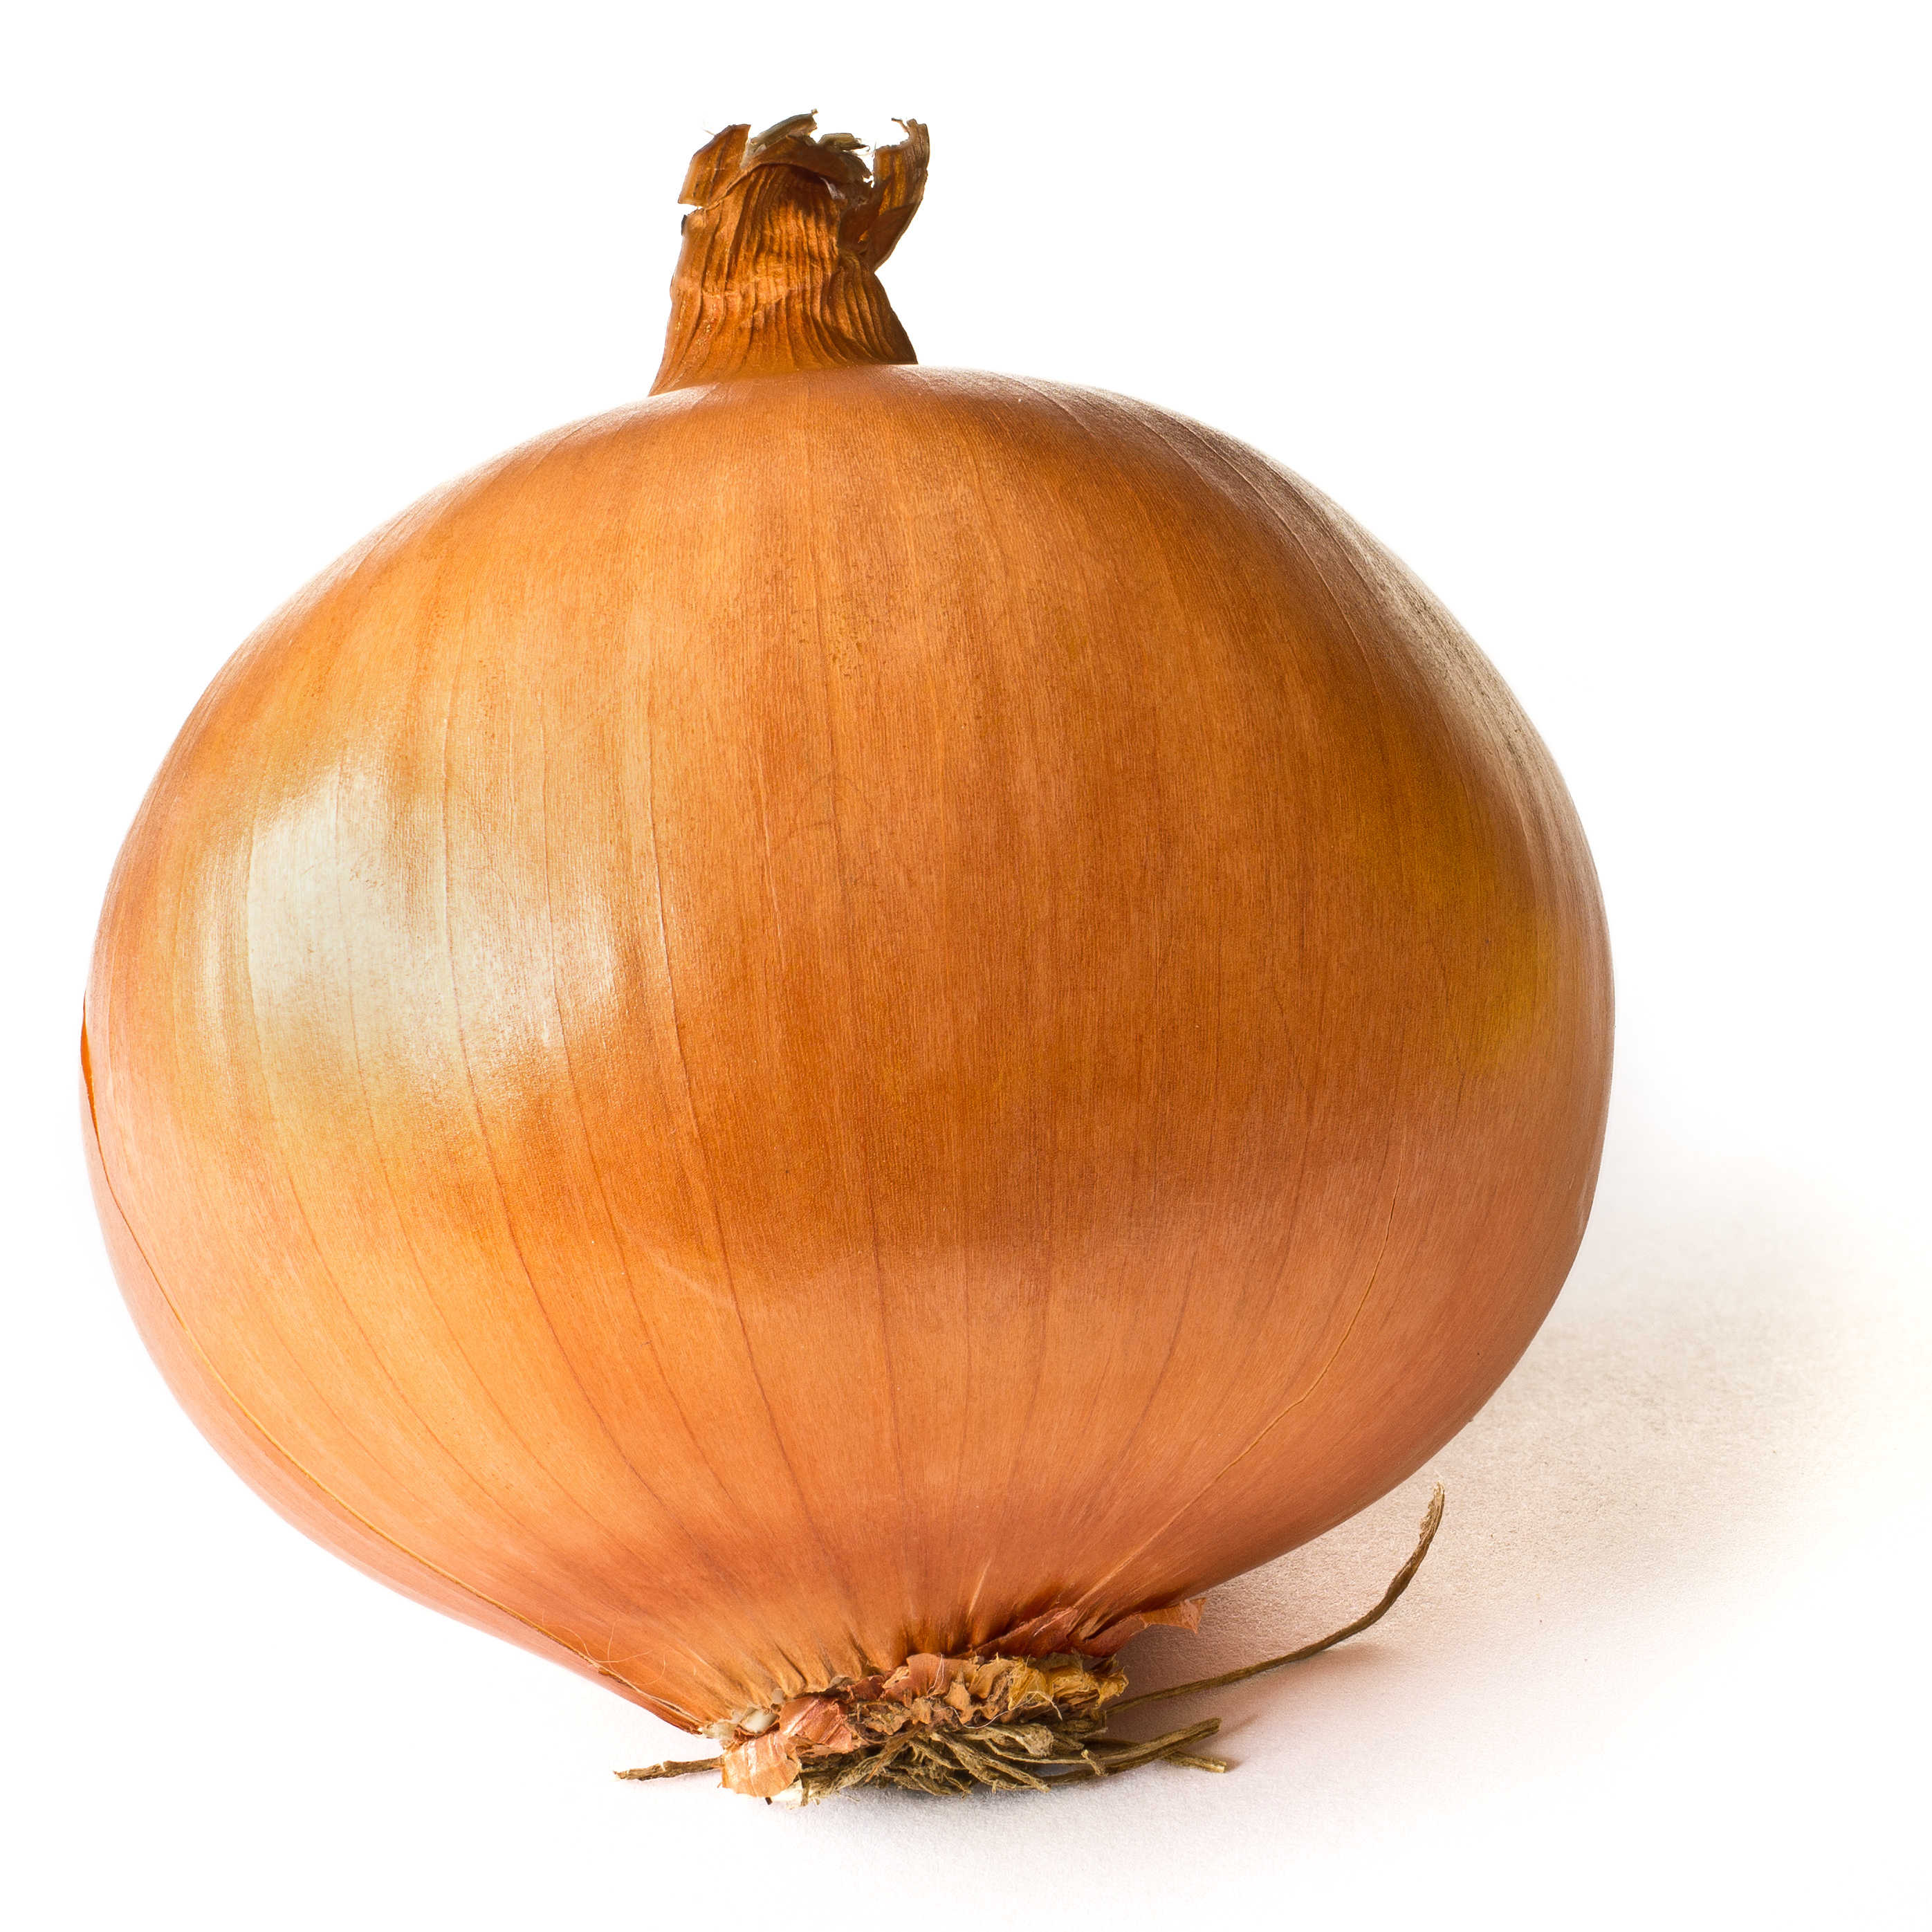 photos of onions